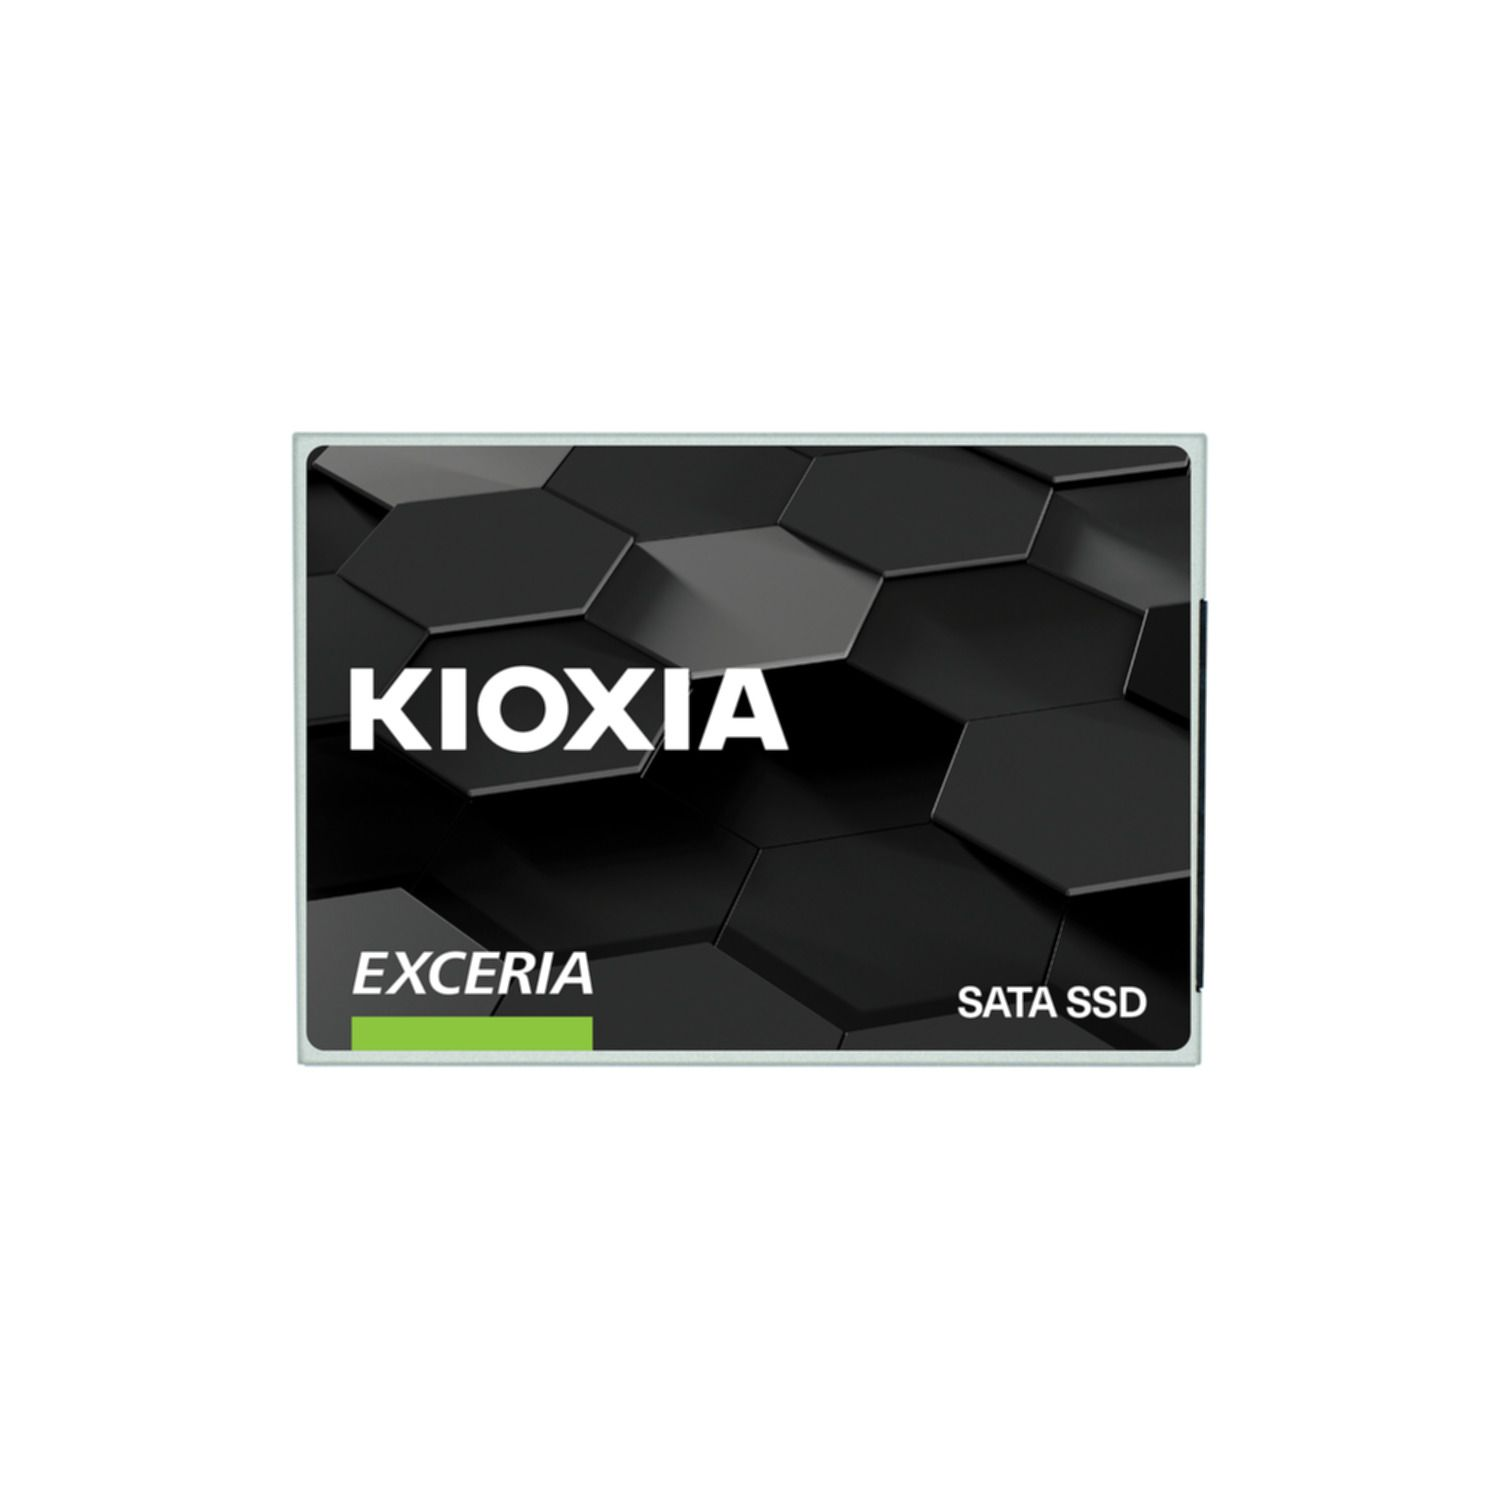 KIOXIA EXCERIA, 480 SSD, intern GB